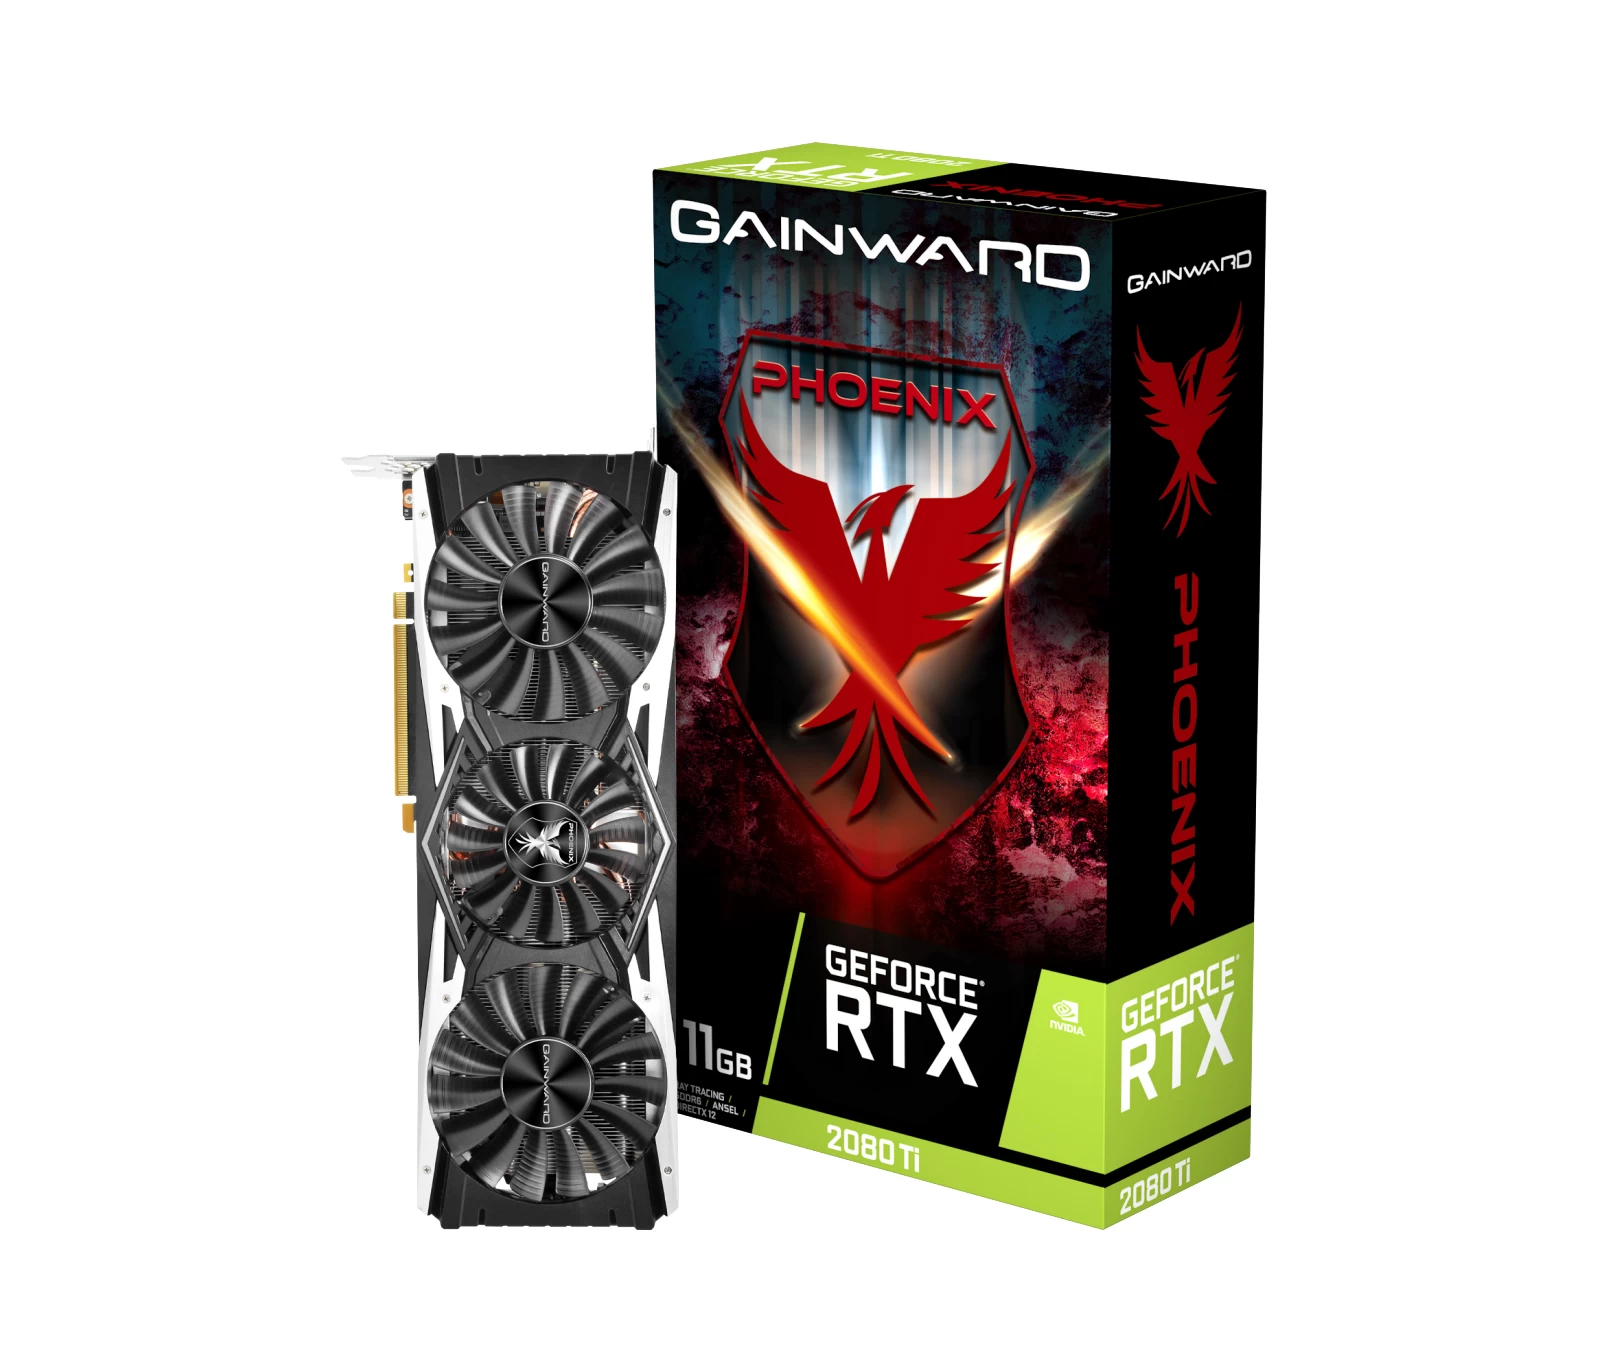 Gainward GeForce RTX 2080 Ti Phoenix Package